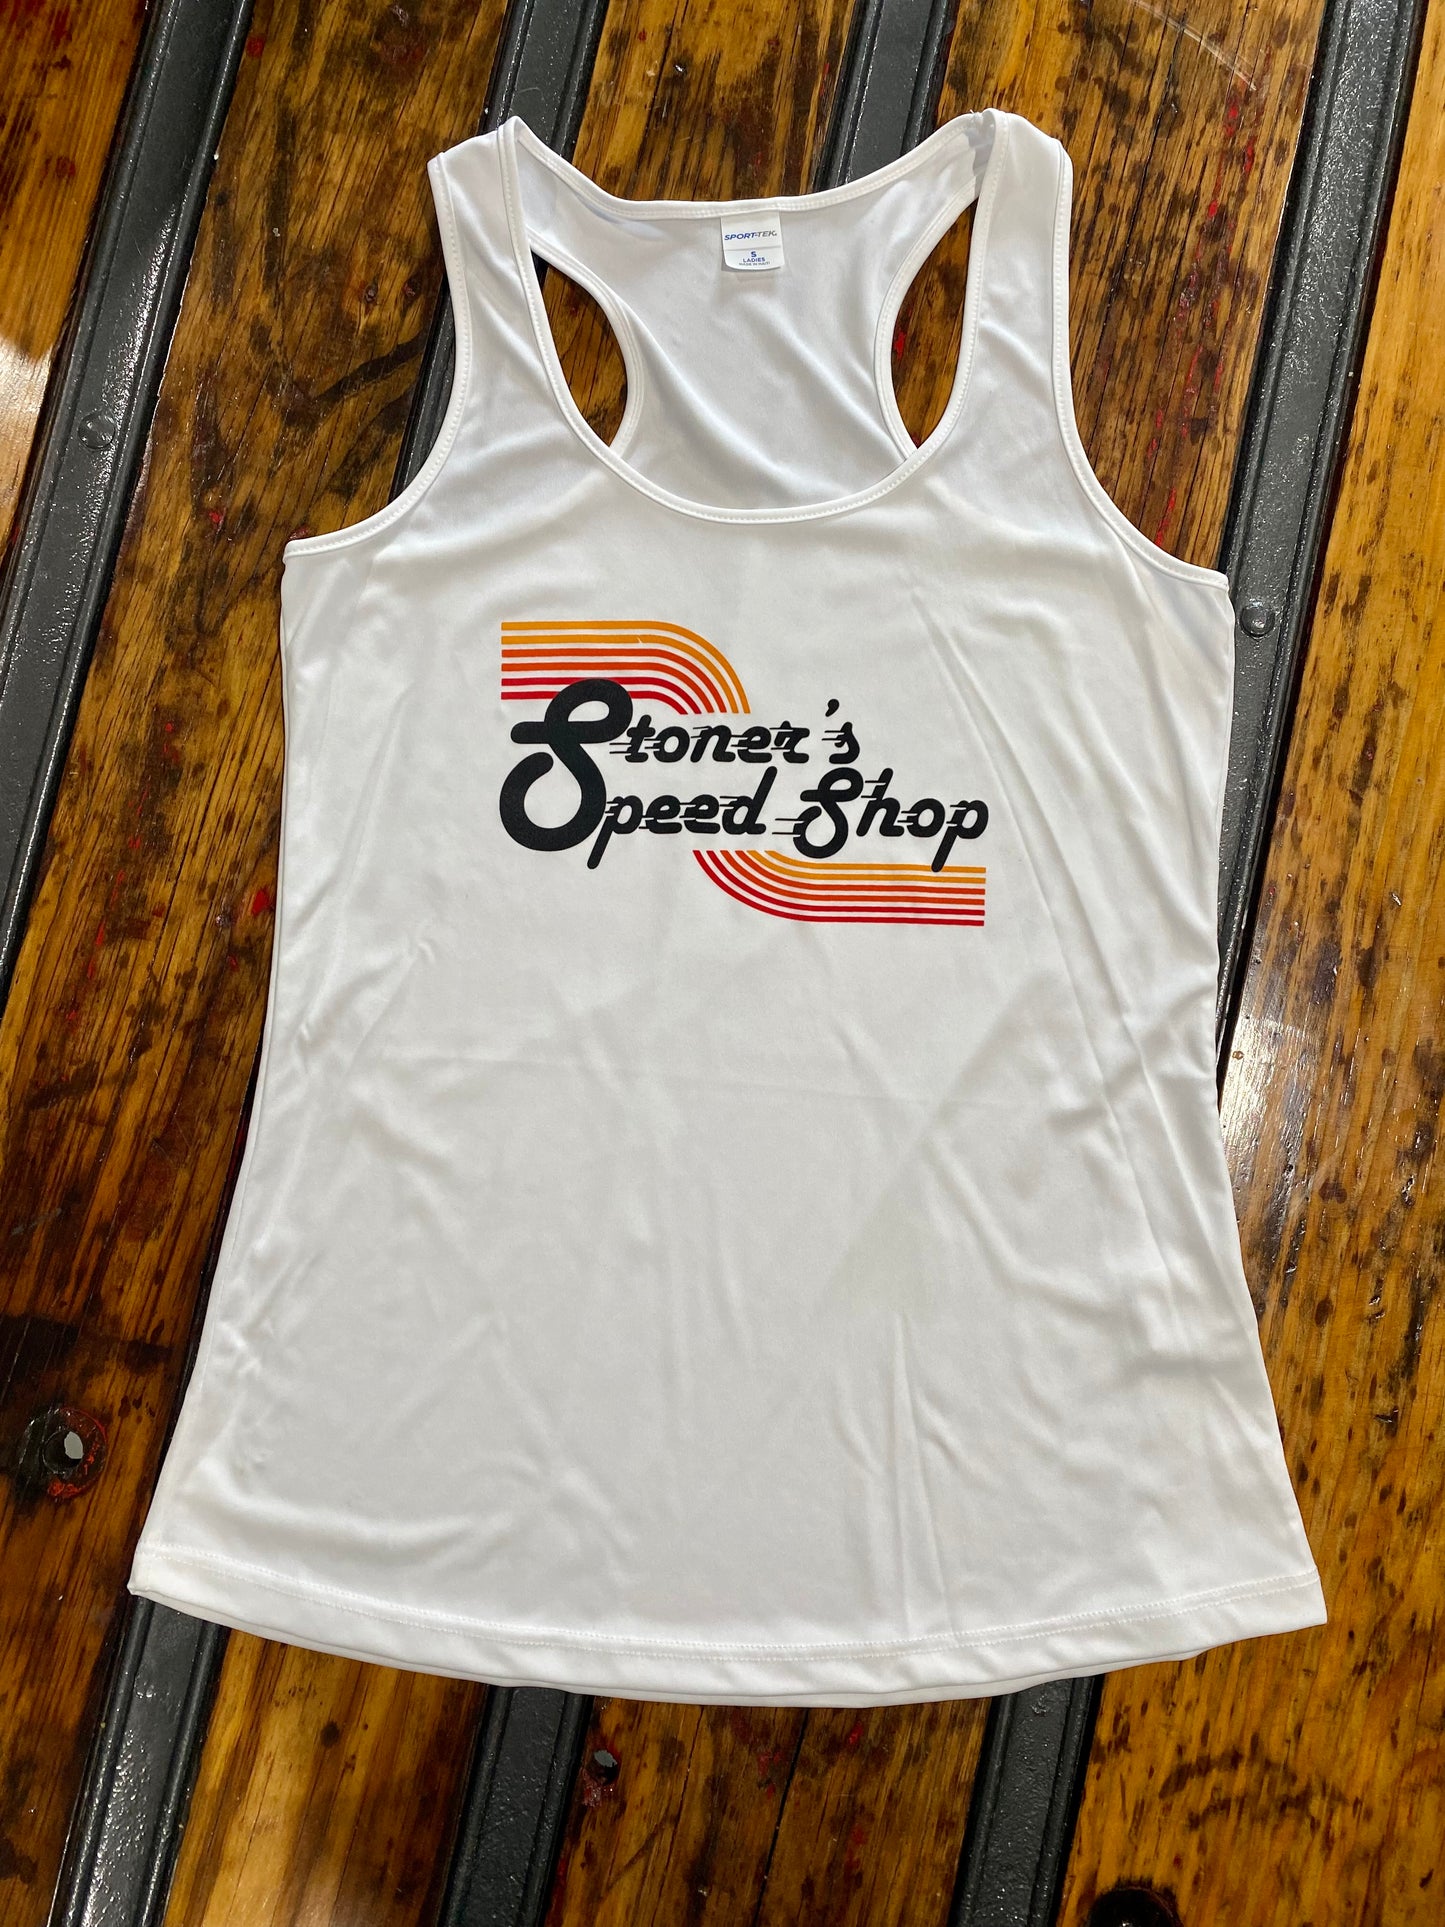 Stoner's Speed Shop White vintage logo tank top